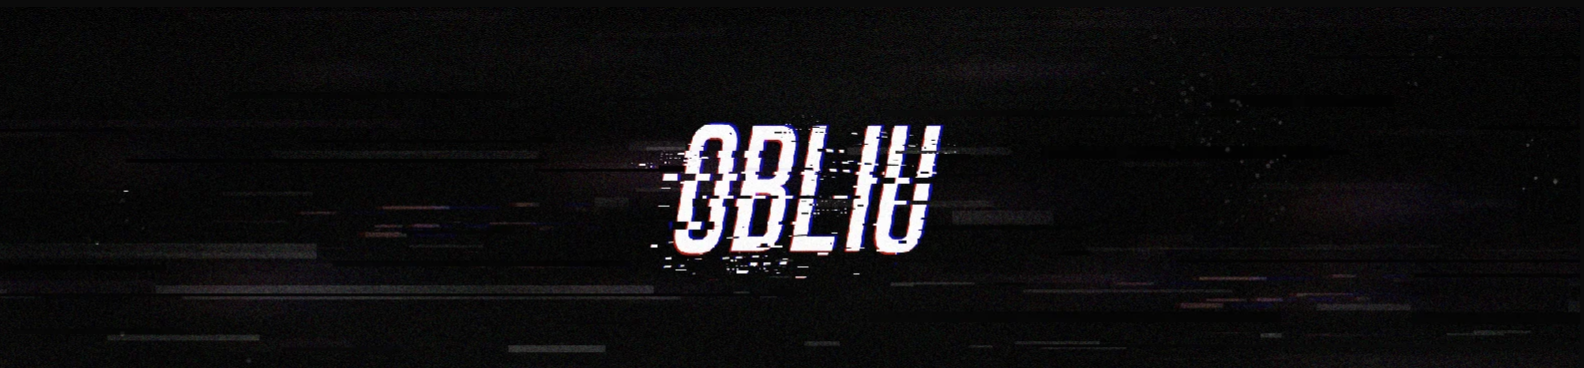 OBLIU 2D BANNER (2017)